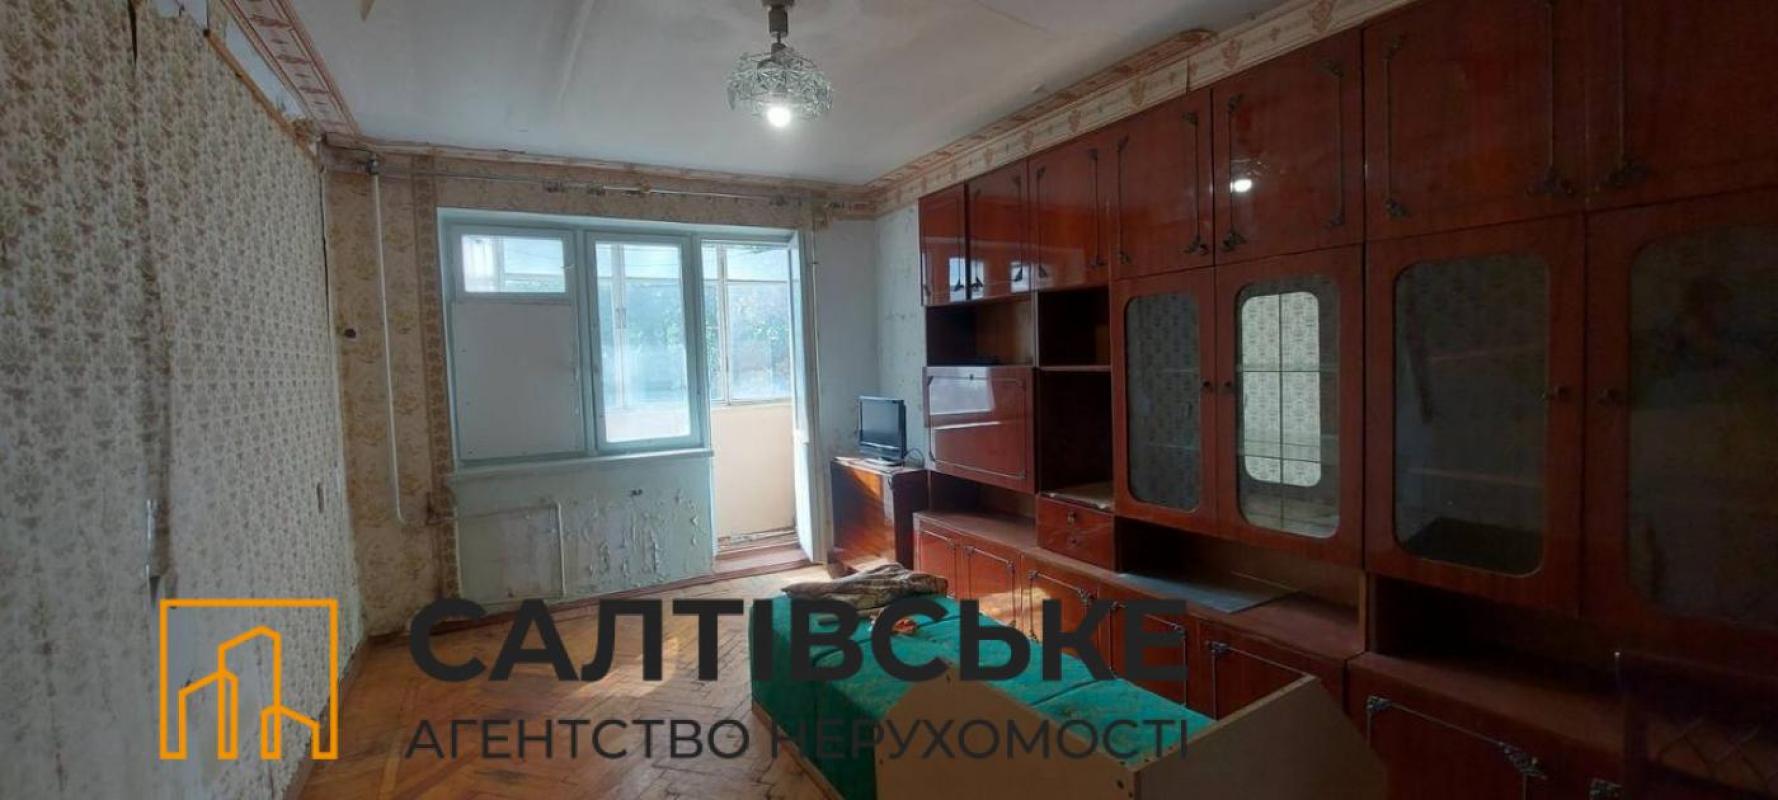 Sale 1 bedroom-(s) apartment 32 sq. m., Svitla Street 10